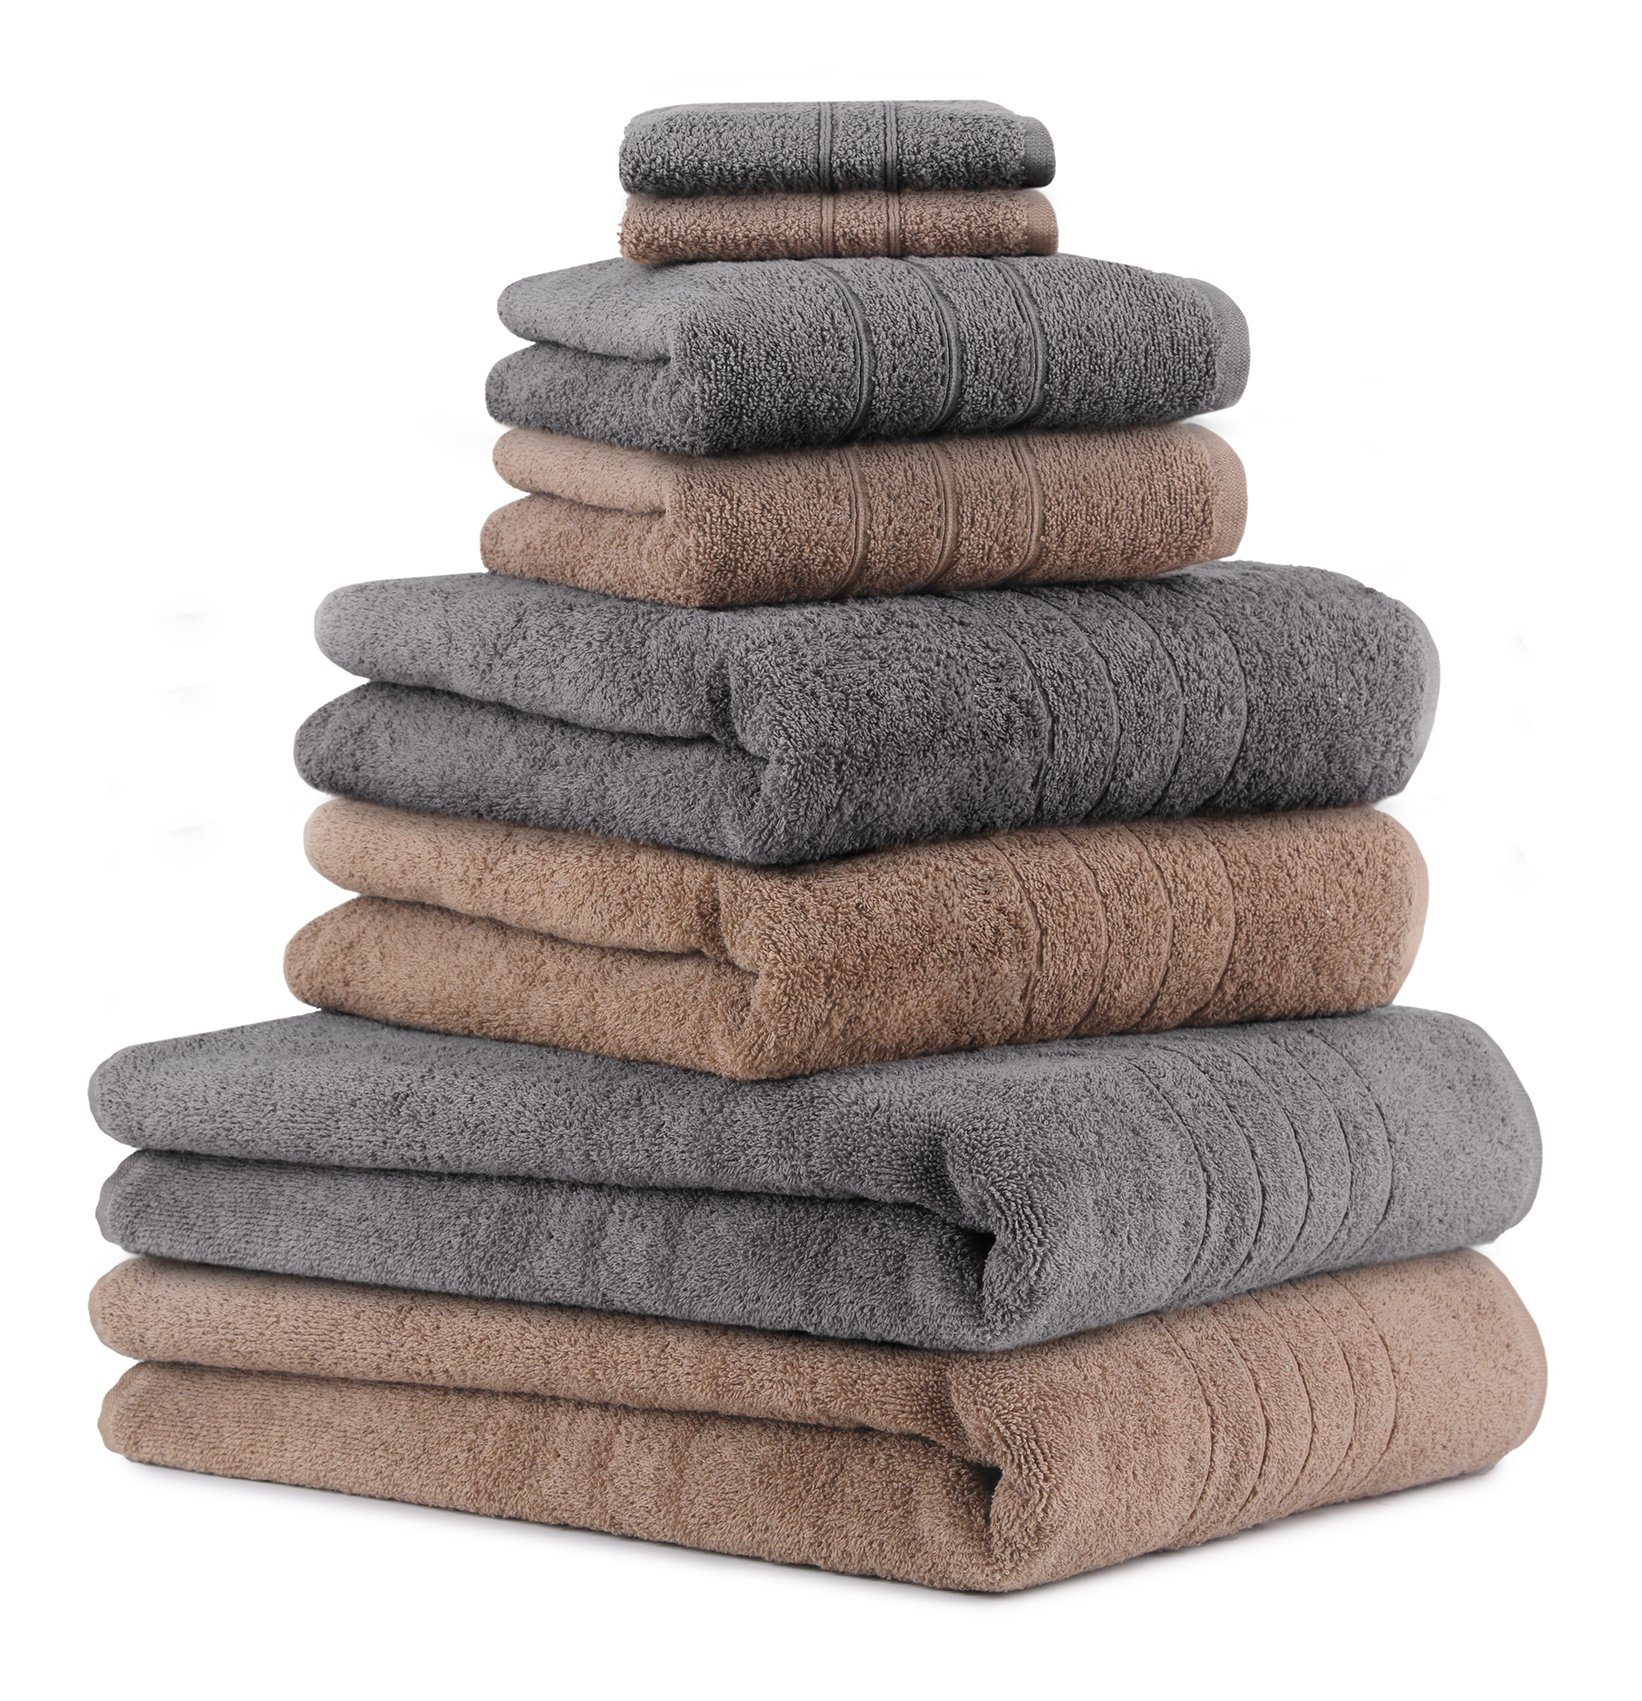 Betz Handtuch Set 8-TLG. Handtuch-Set Deluxe 100% Baumwolle 2 Badetücher 2 Duschtücher 2 Handtücher 2 Seiftücher Farbe anthrazit grau und Mokka, 100% Baumwolle, (8-tlg)